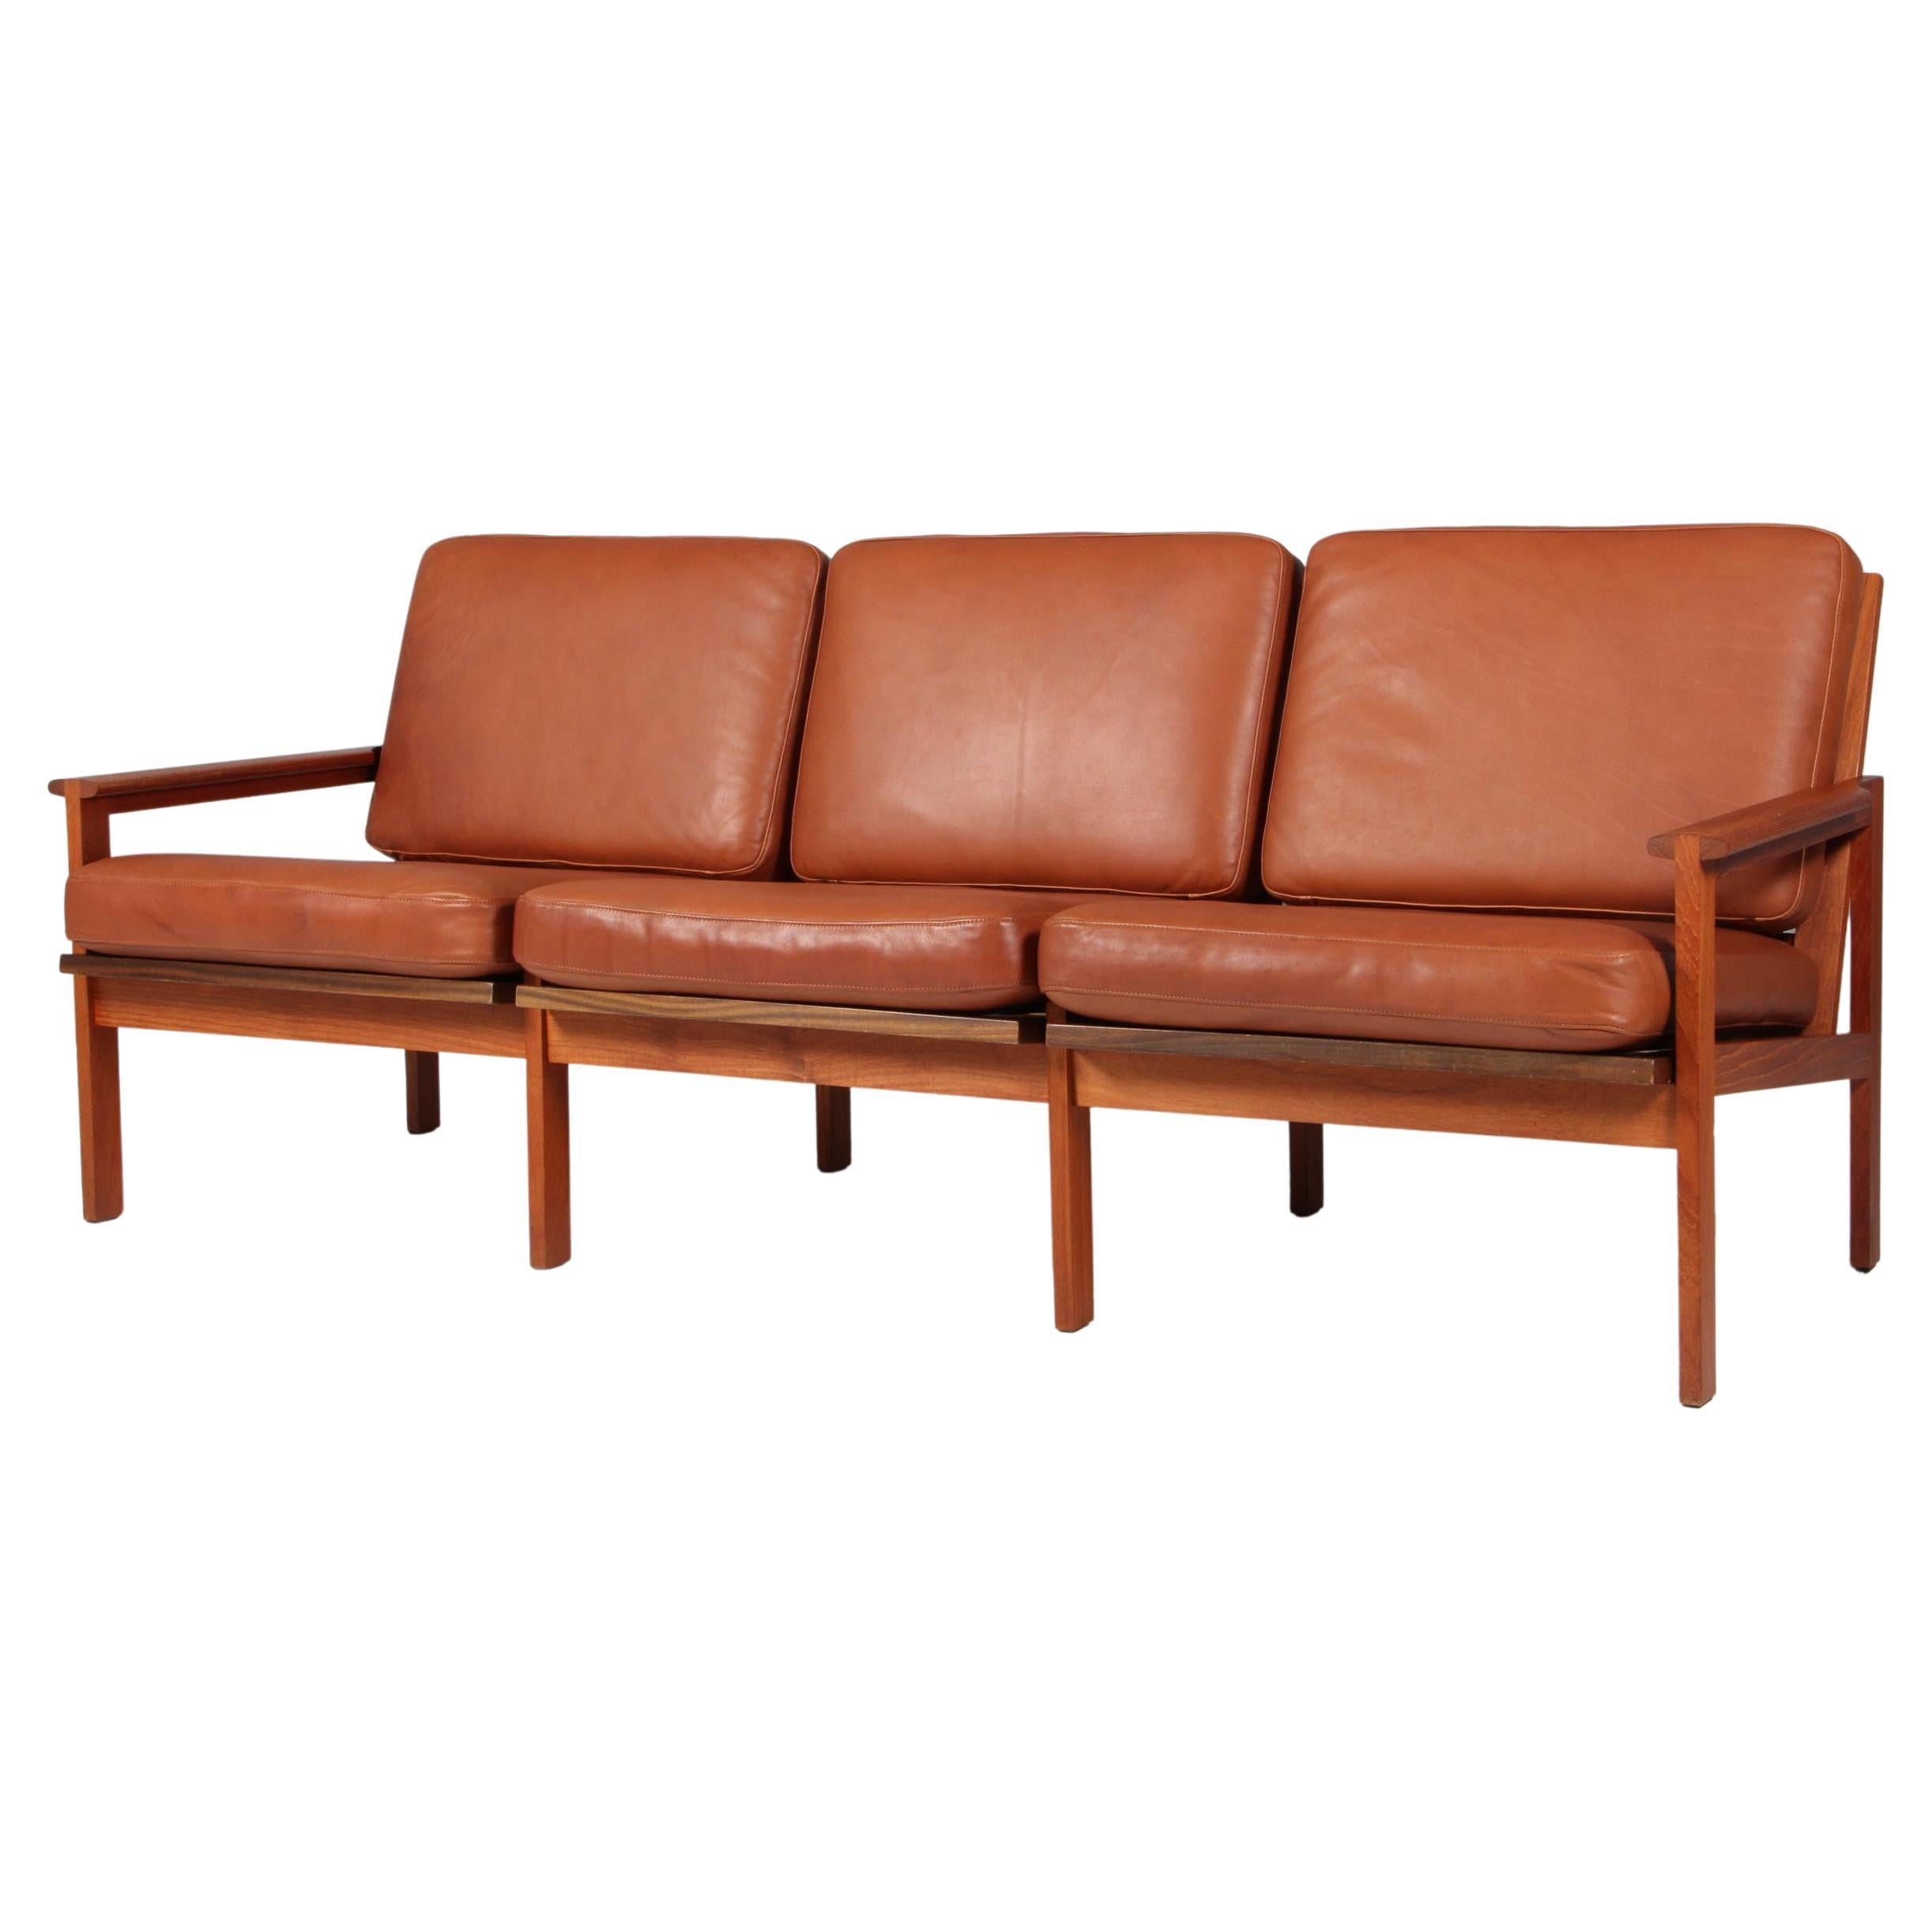 Illum Wikkelsø for N. Eilersen Three Seat Sofa, Model 20, in Solid Teak